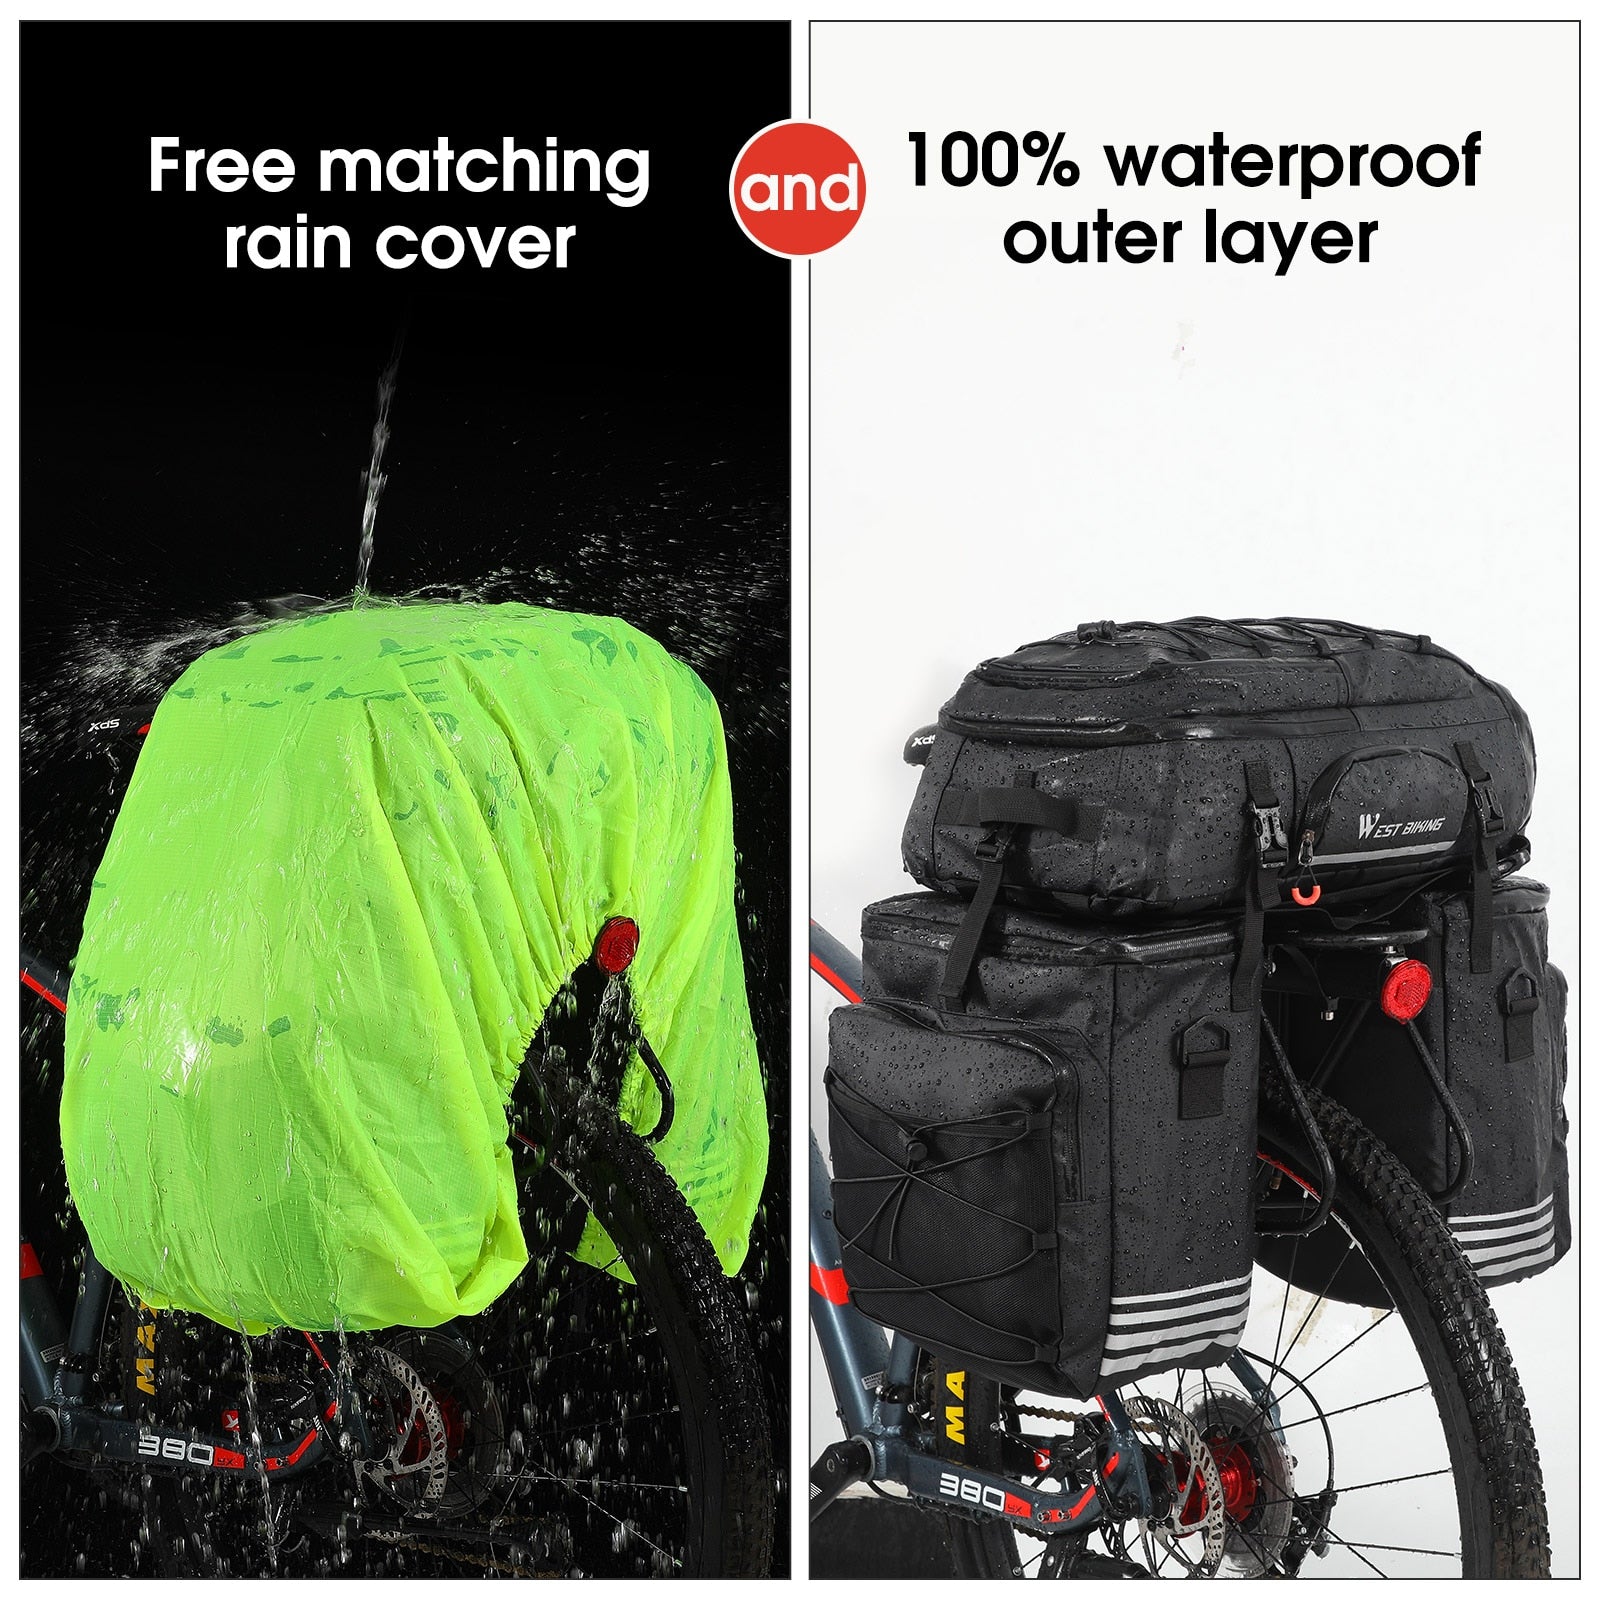 Multifunctional Bike Bag Rear Seat Trunk Bag Waterproof Bicycle Pannier MTB Mountain Cycling Luggage Sport Backpack